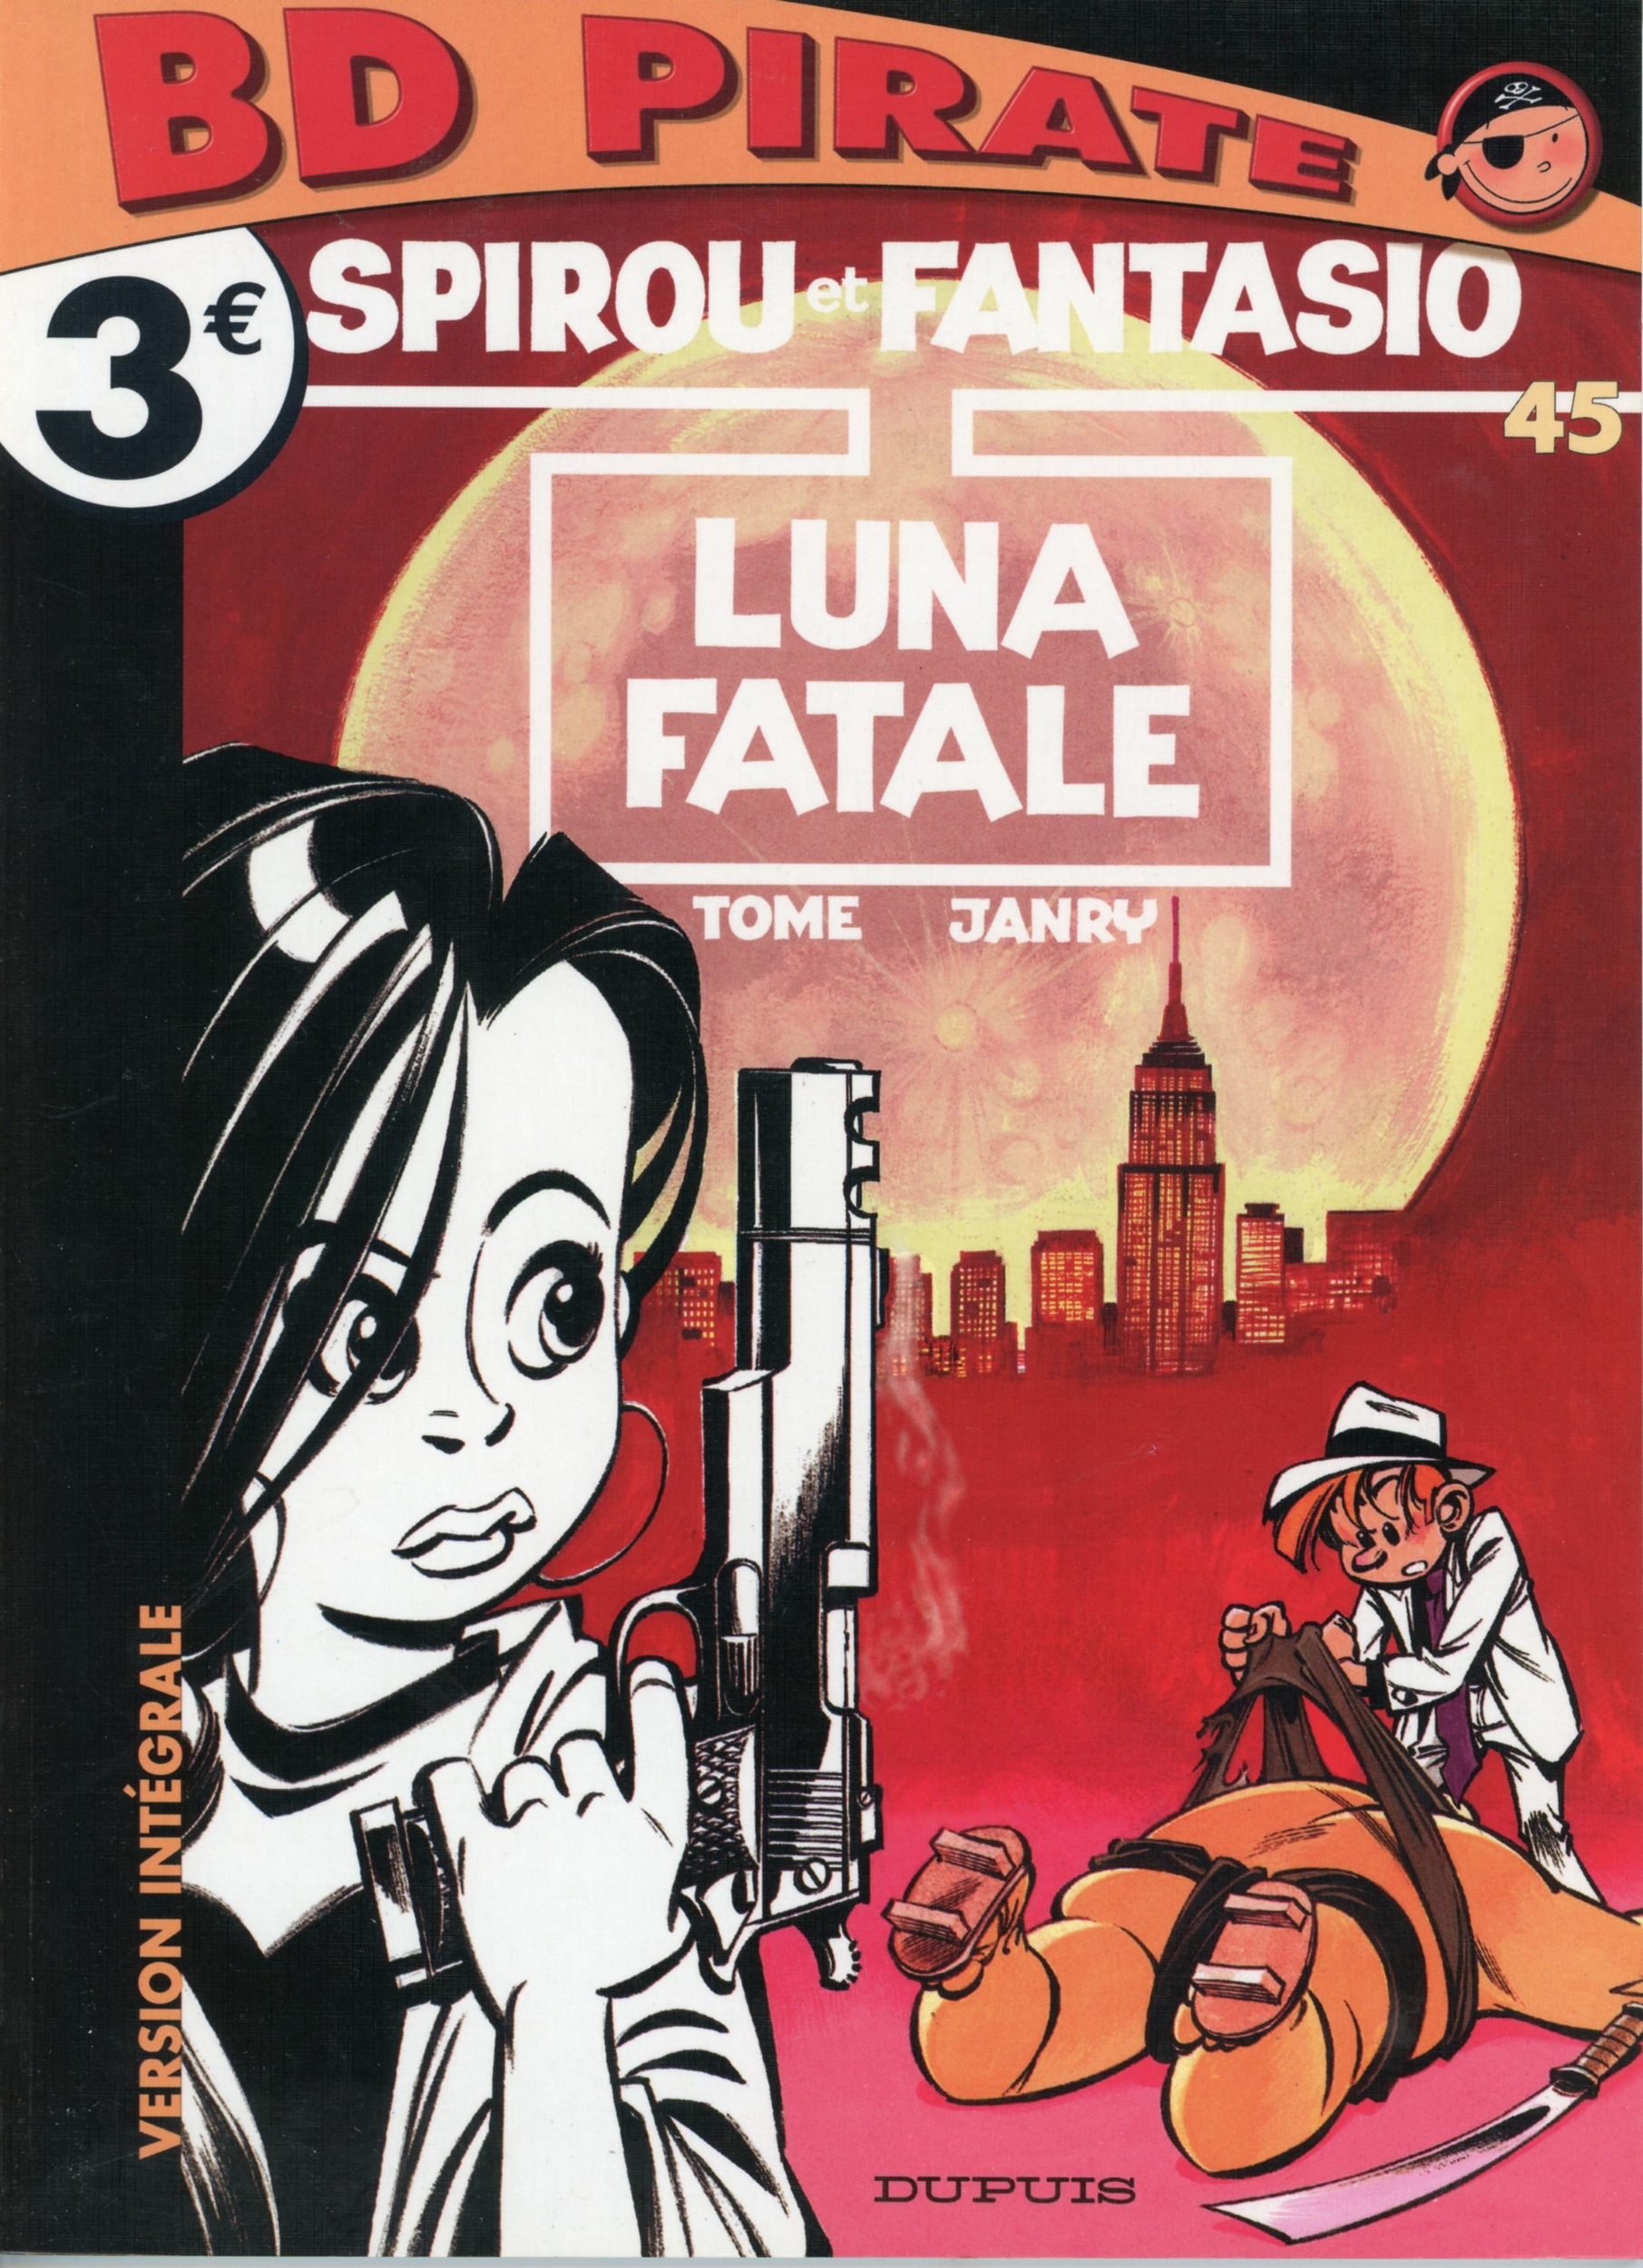 SPIROU ET FANTASIO LUNA FATALE N°45 - BD PIRATE DUPUIS 2005